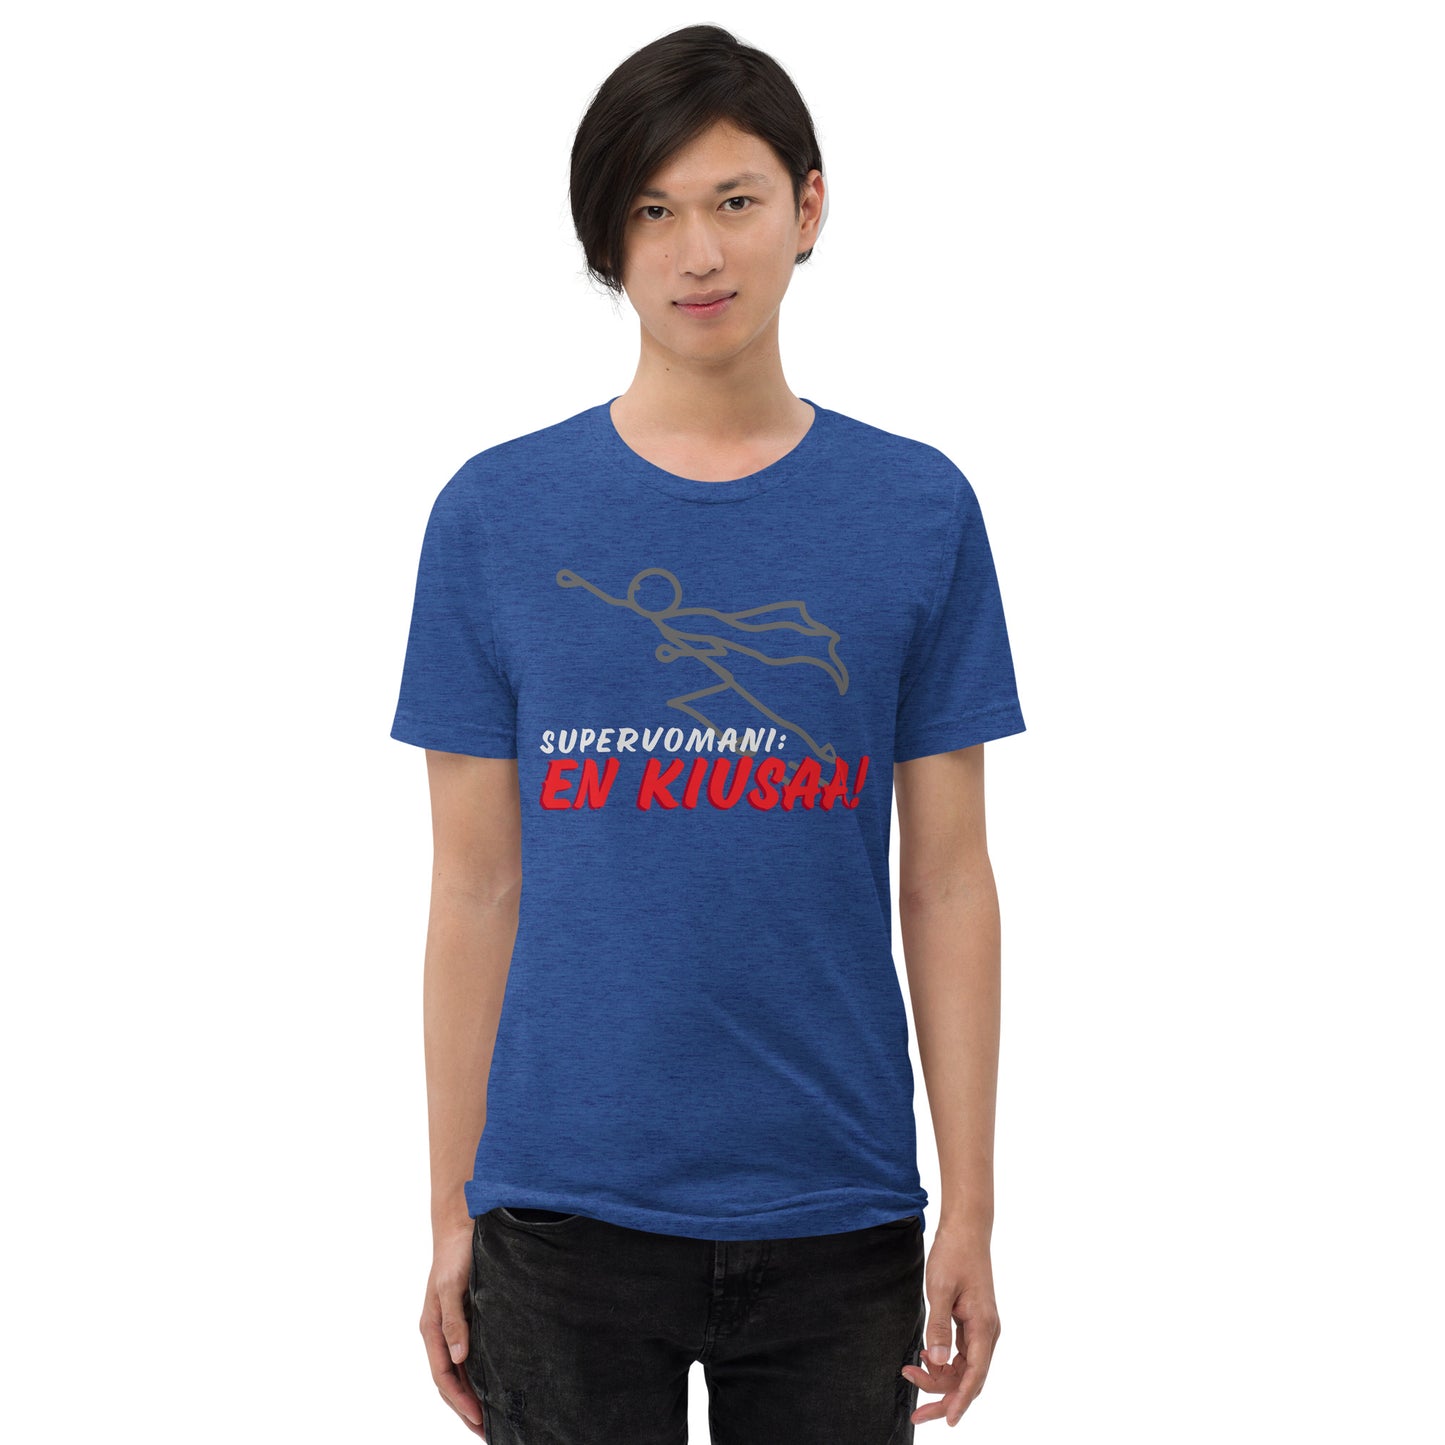 "I don't bully" unisex t-shirt